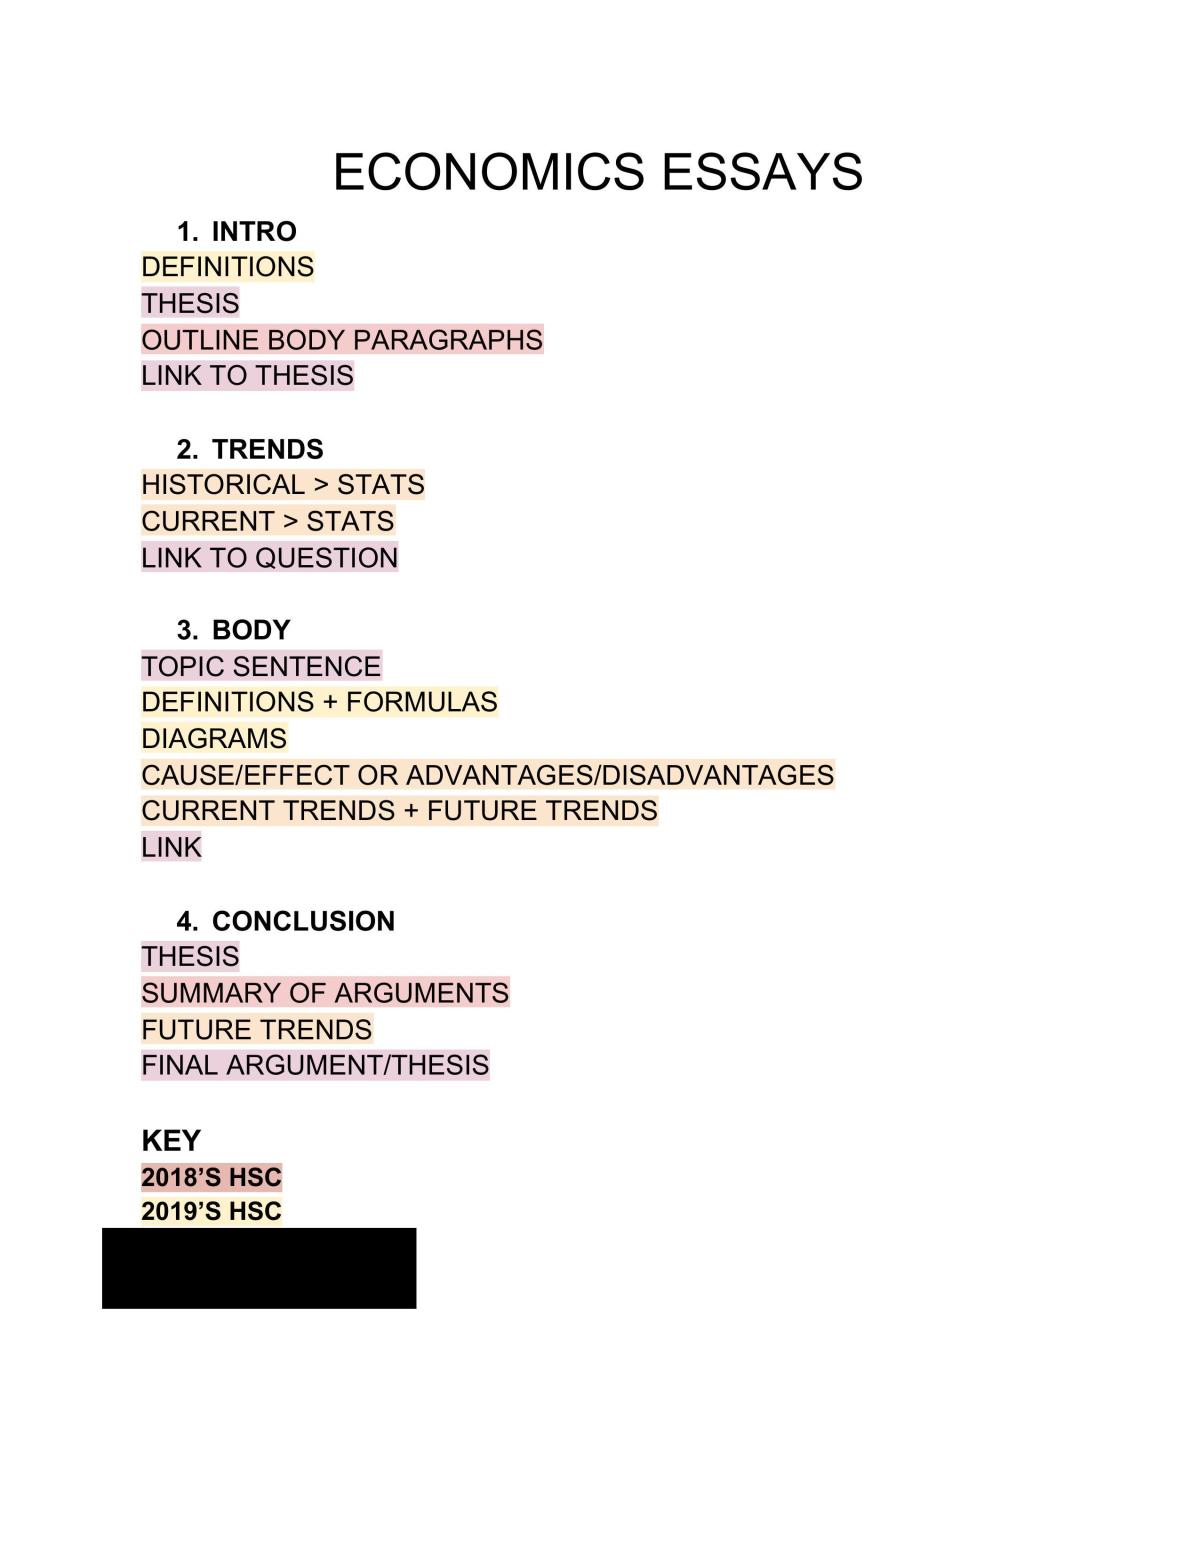 structure of an economics essay